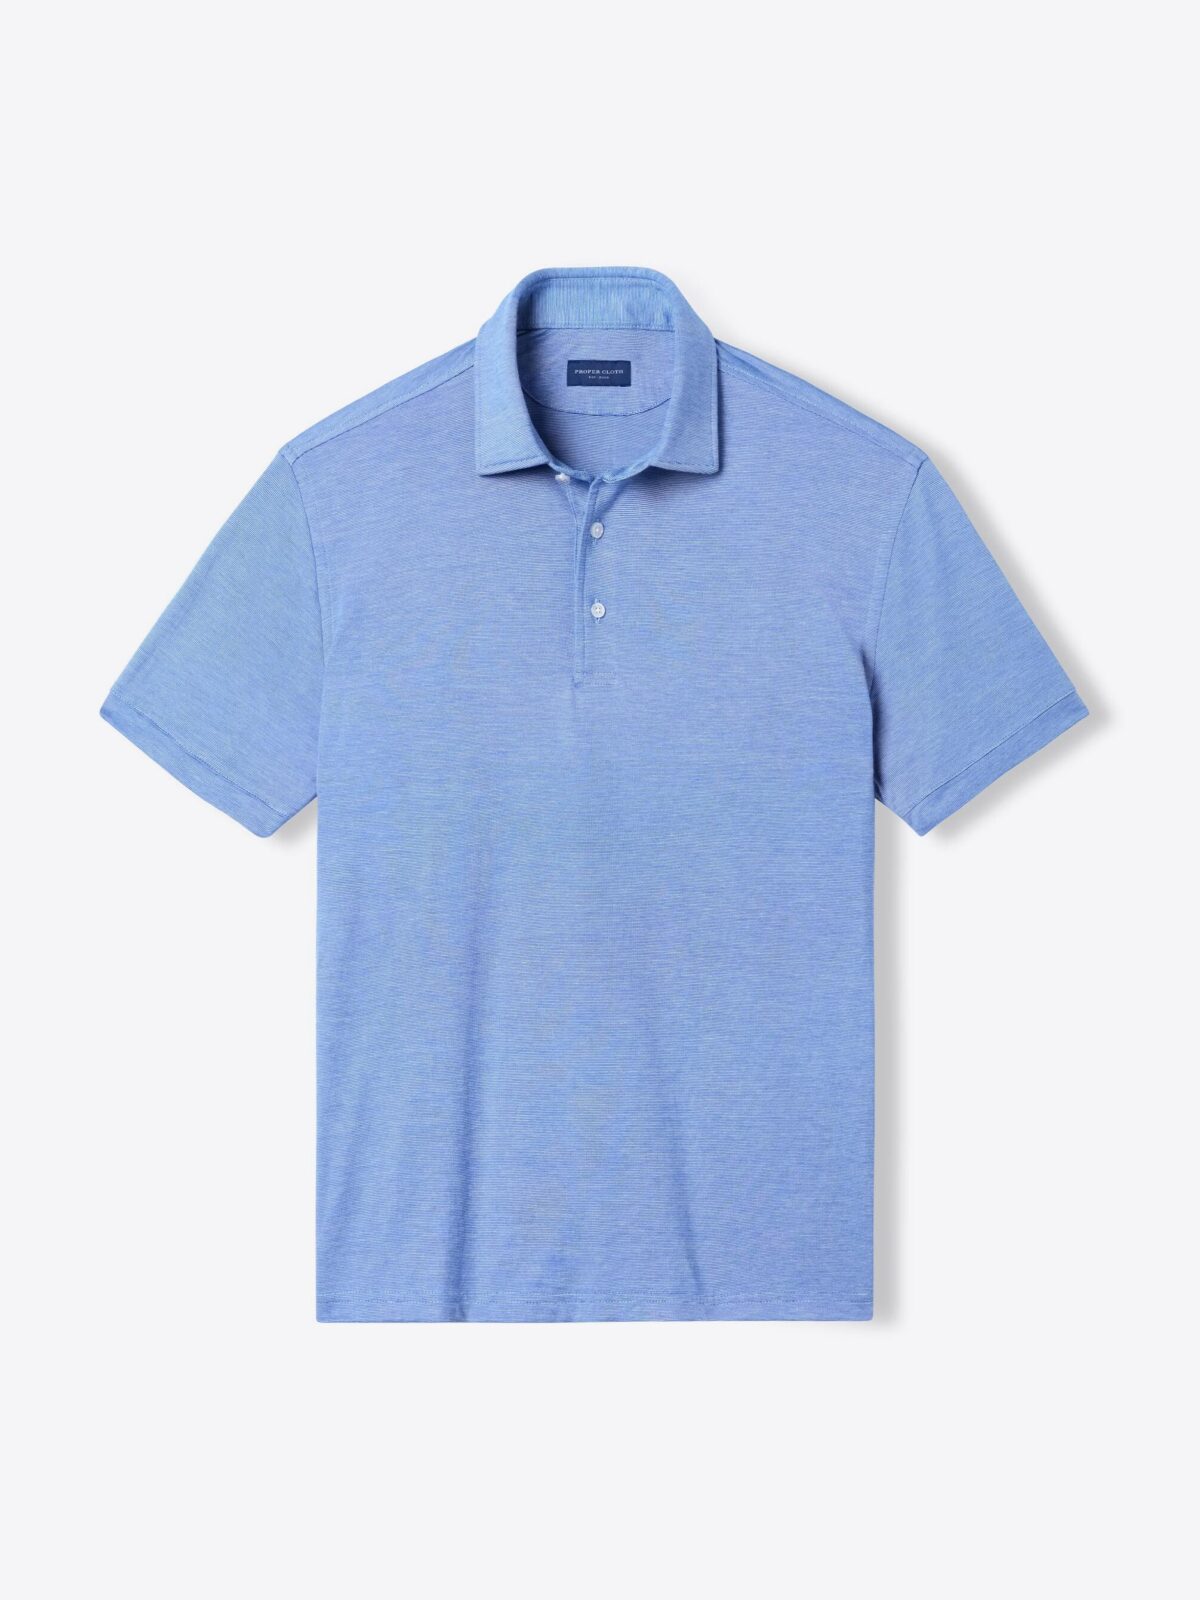 Pinehurst Blue Melange Cotton Shirt Jersey Proper by and Tencel Cloth